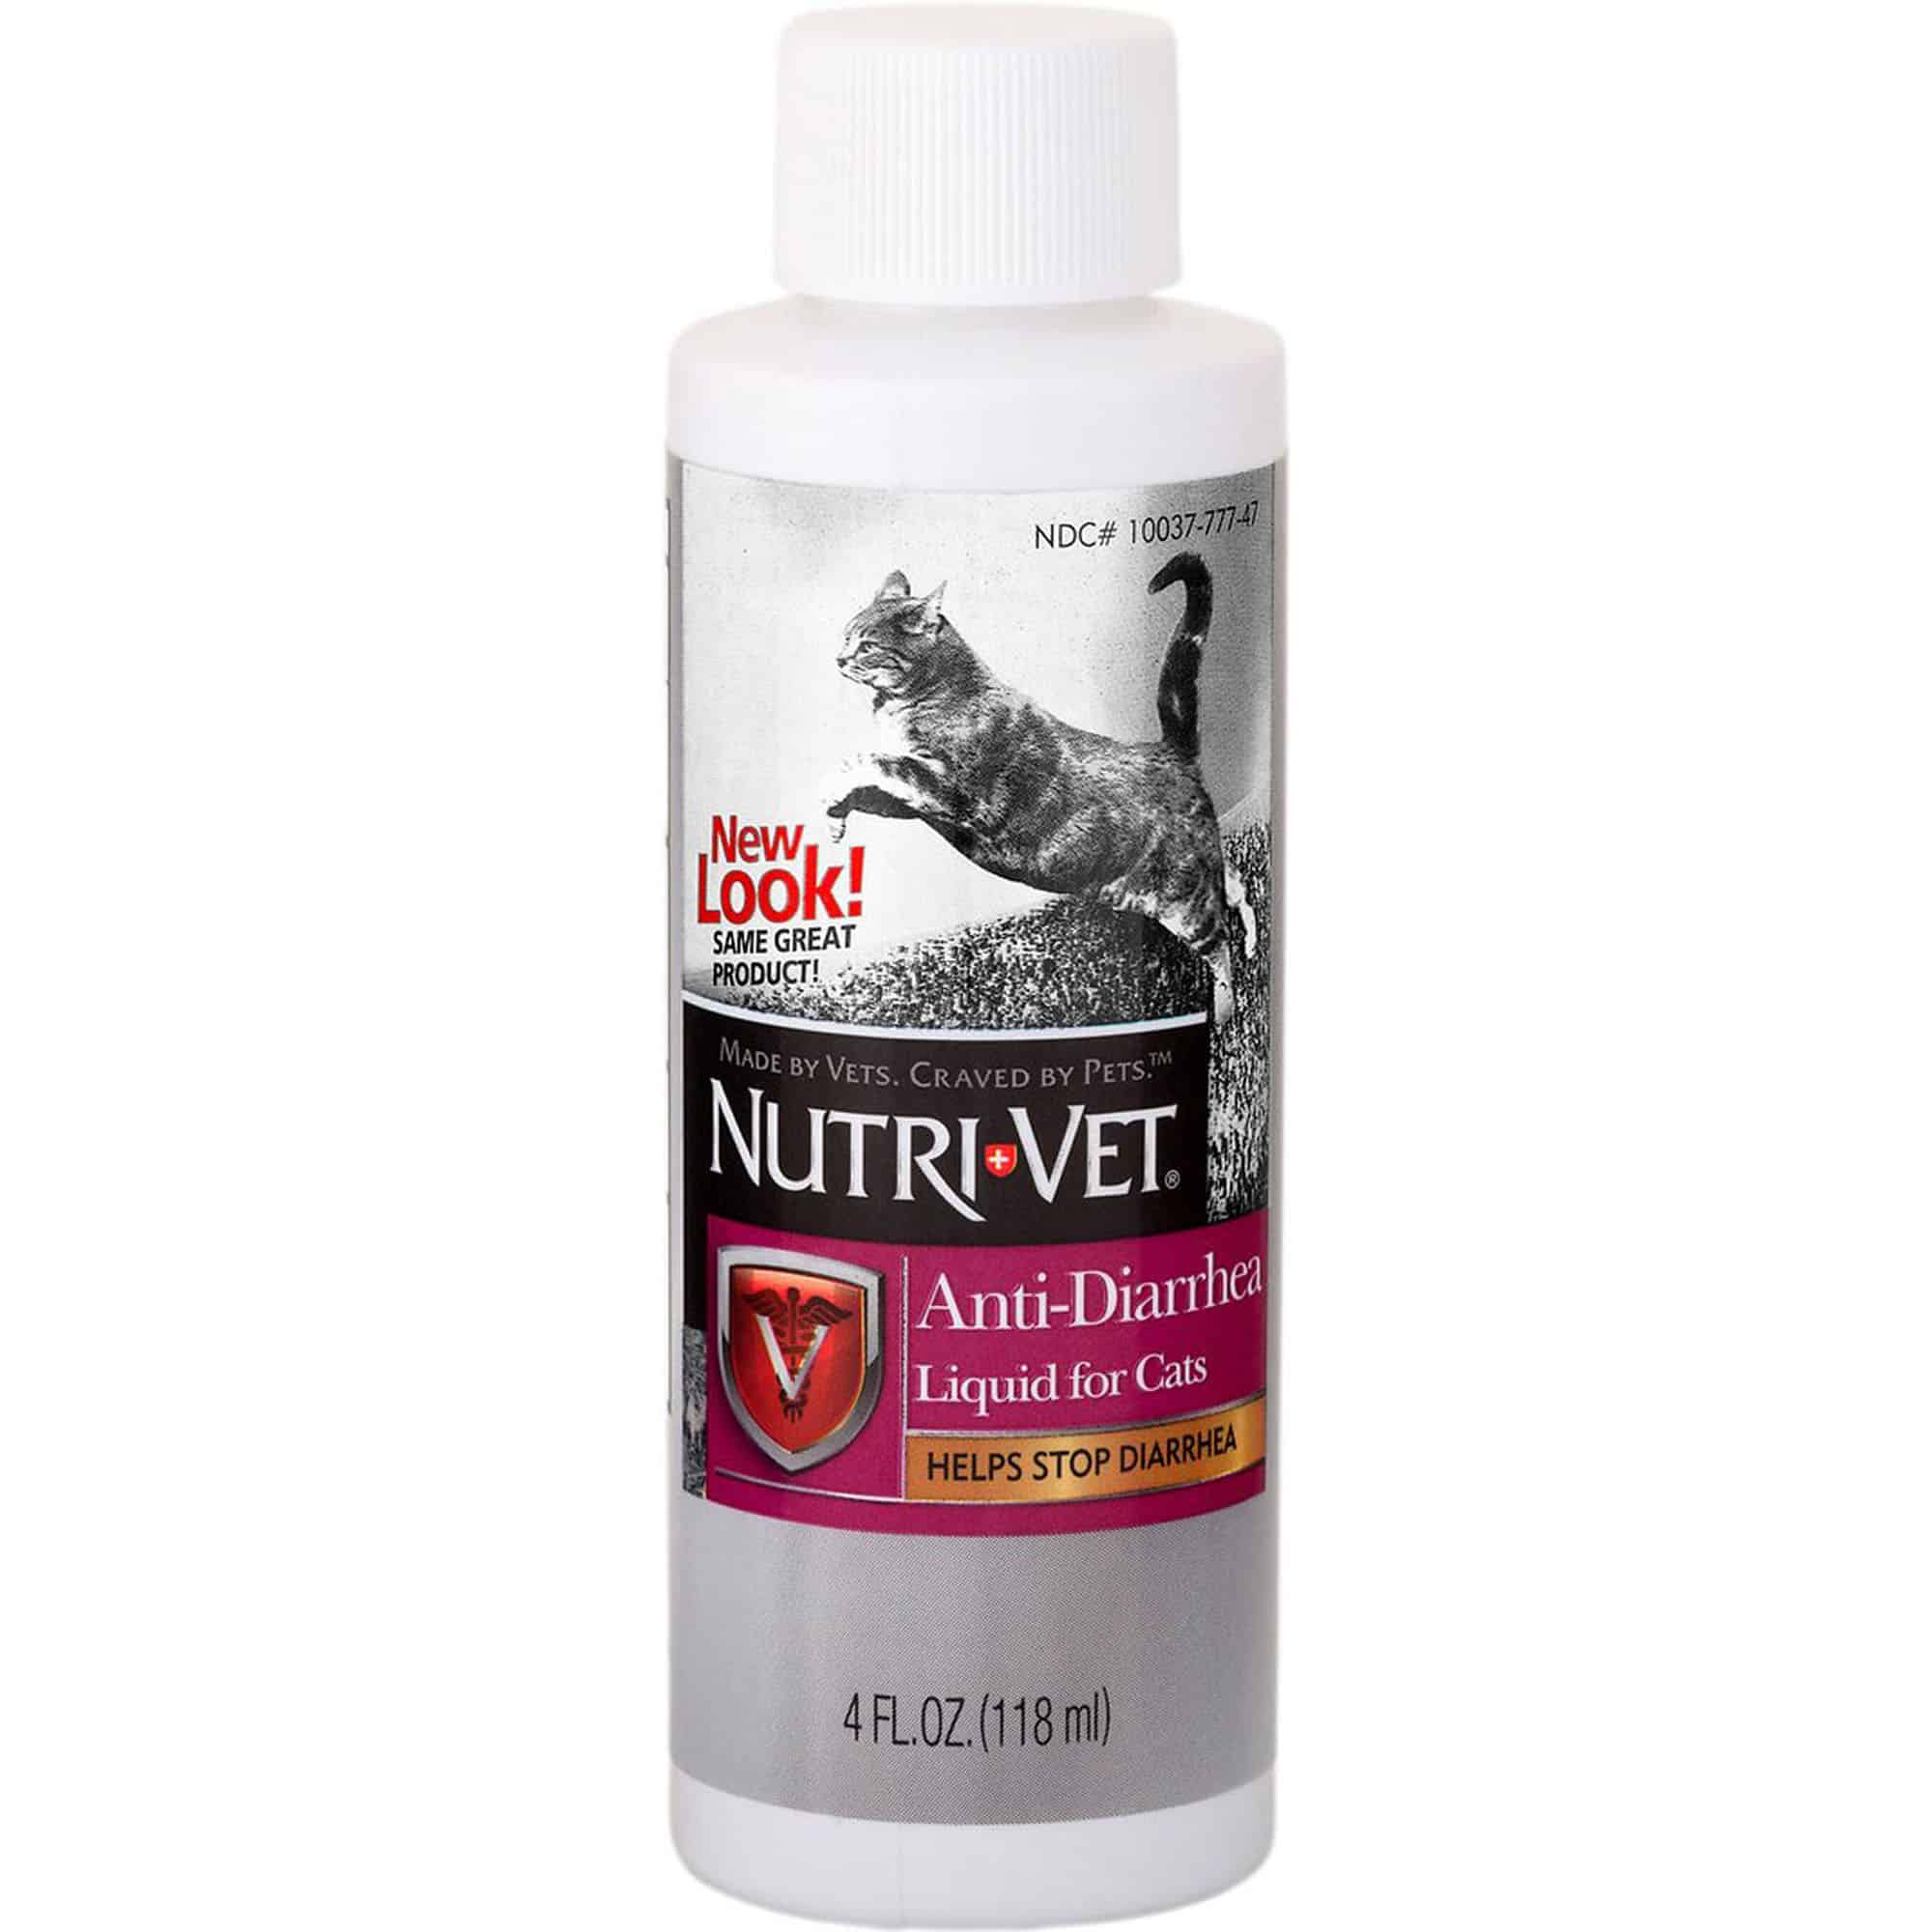 Cat Anti Diarrhea Made in USA Helps Stop Diarrhea 4 oz from Nutrivet ...